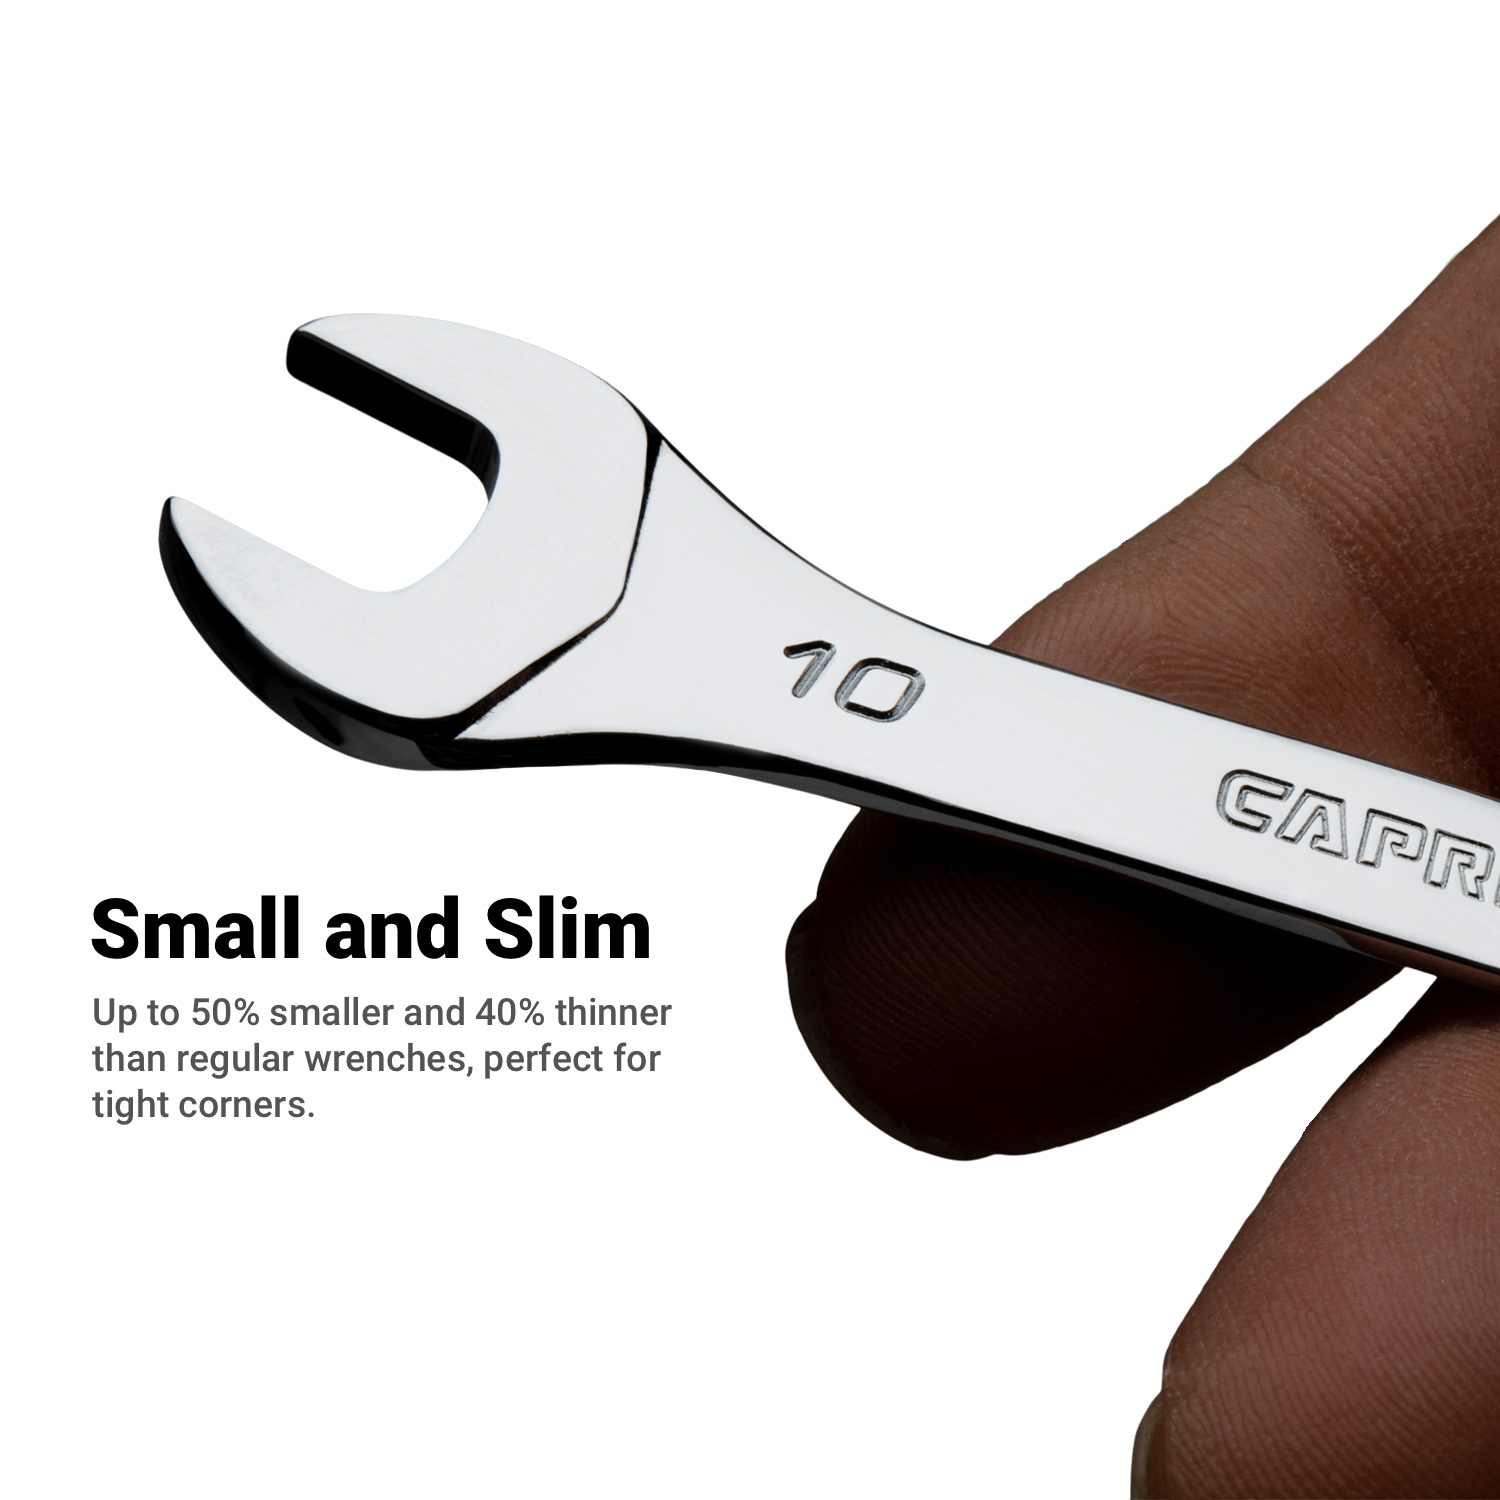 Capri Tools 1/2 in. x 9/16 in. Slim Mini Open End Wrench, SAE